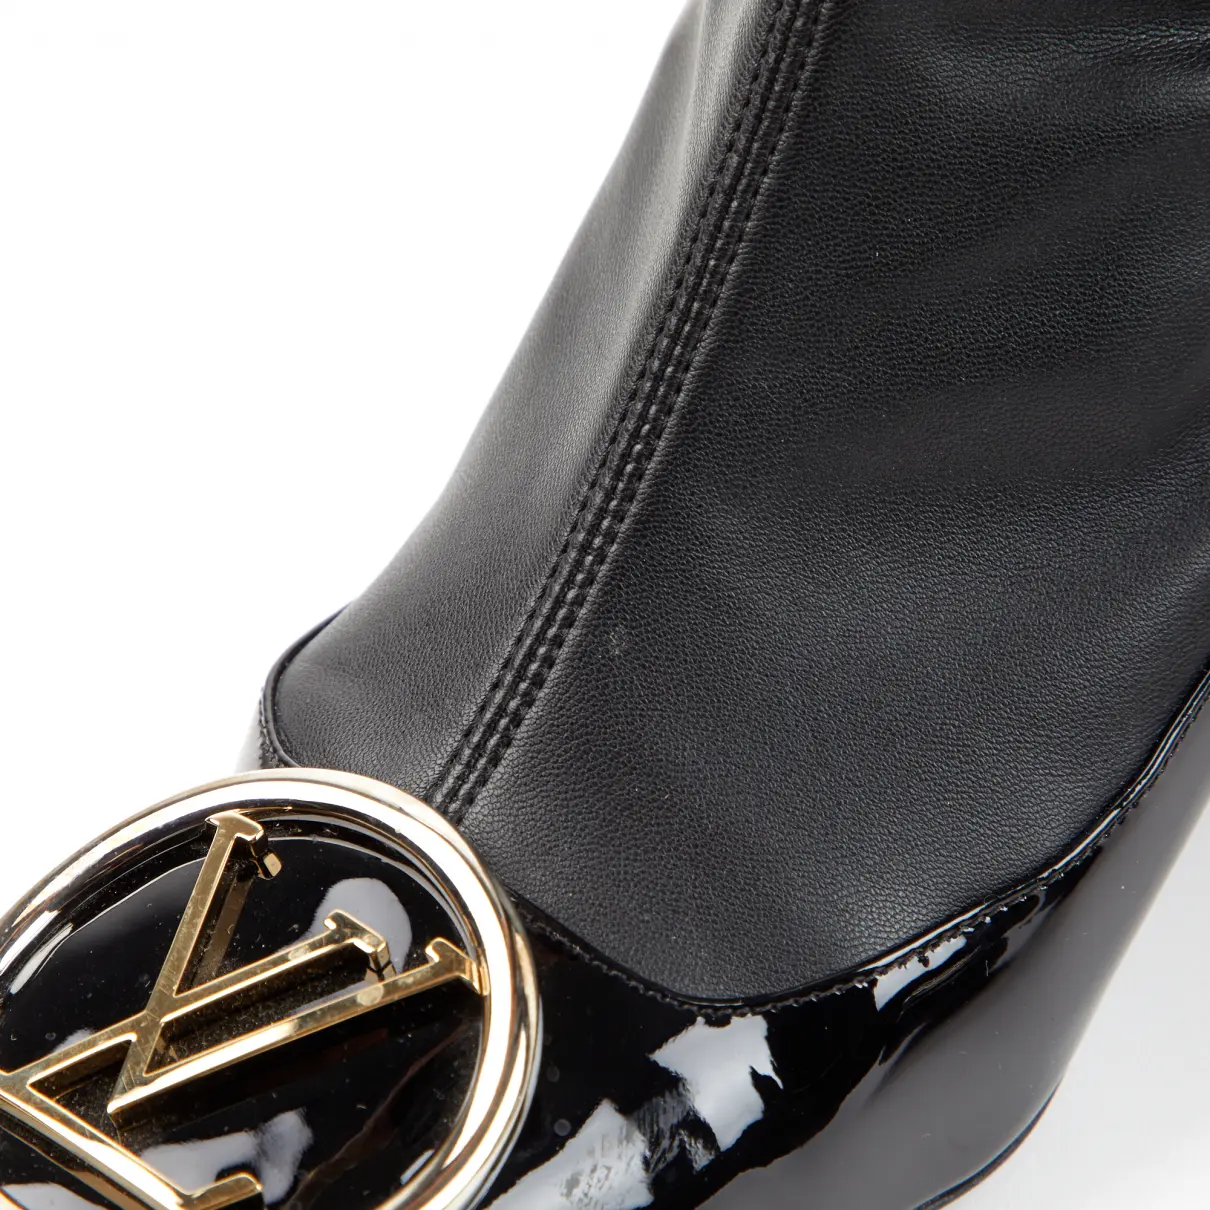 Patent leather boots Louis Vuitton